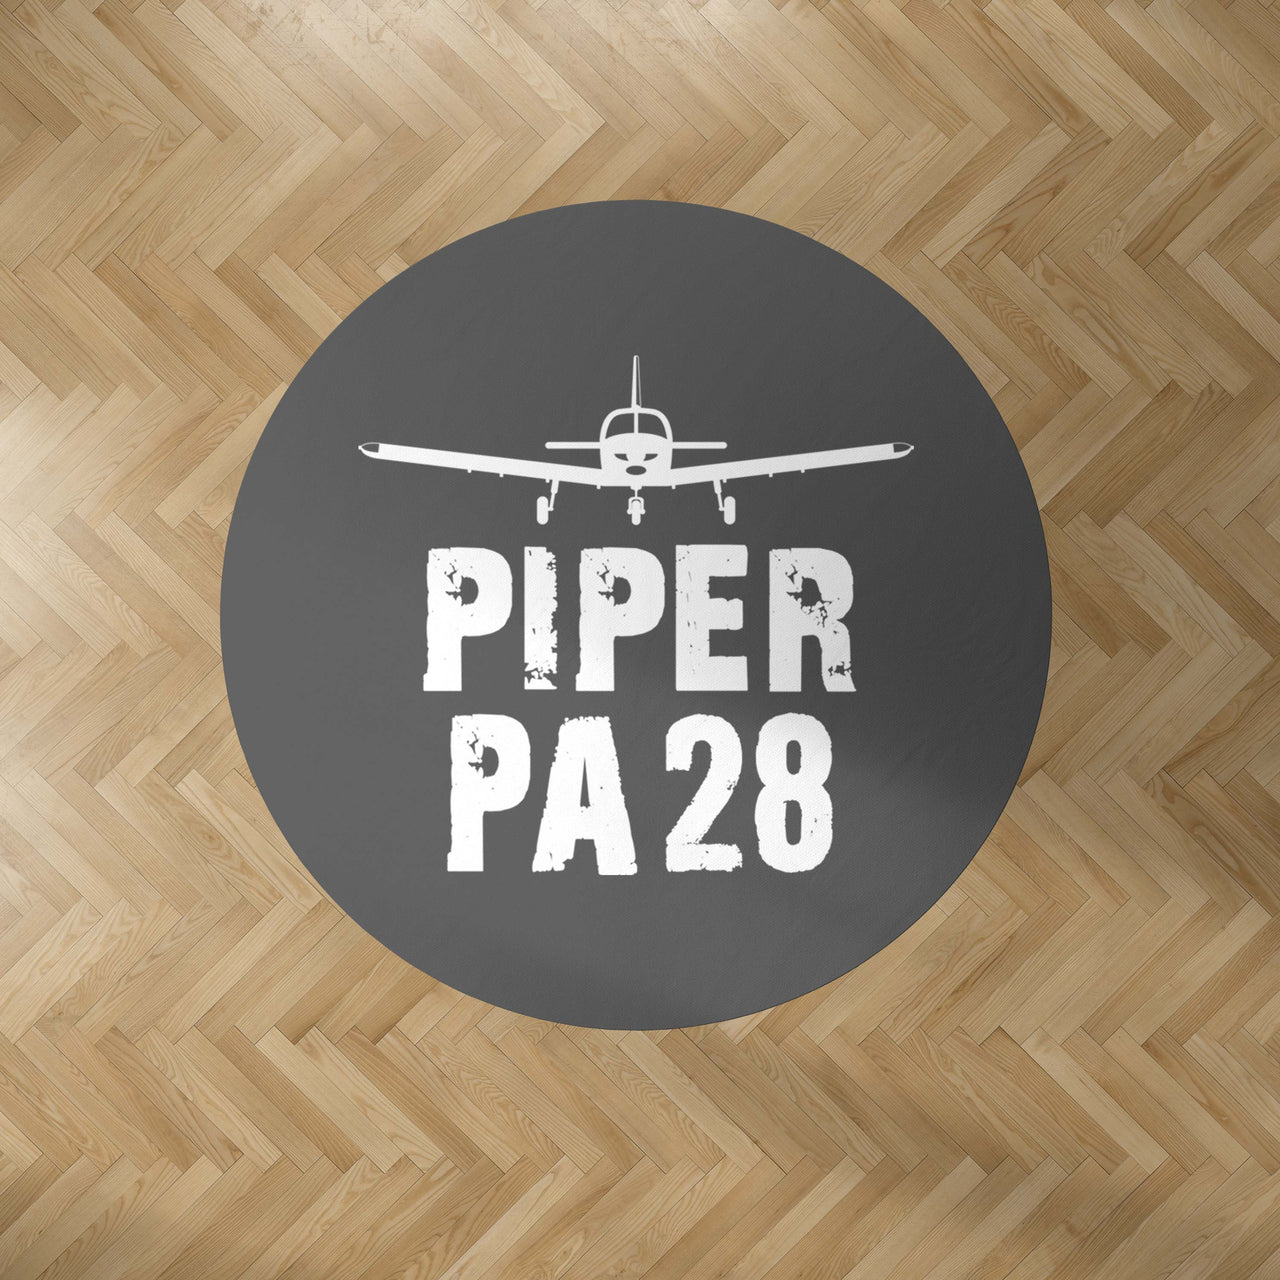 Piper PA28 & Plane Designed Carpet & Floor Mats (Round)